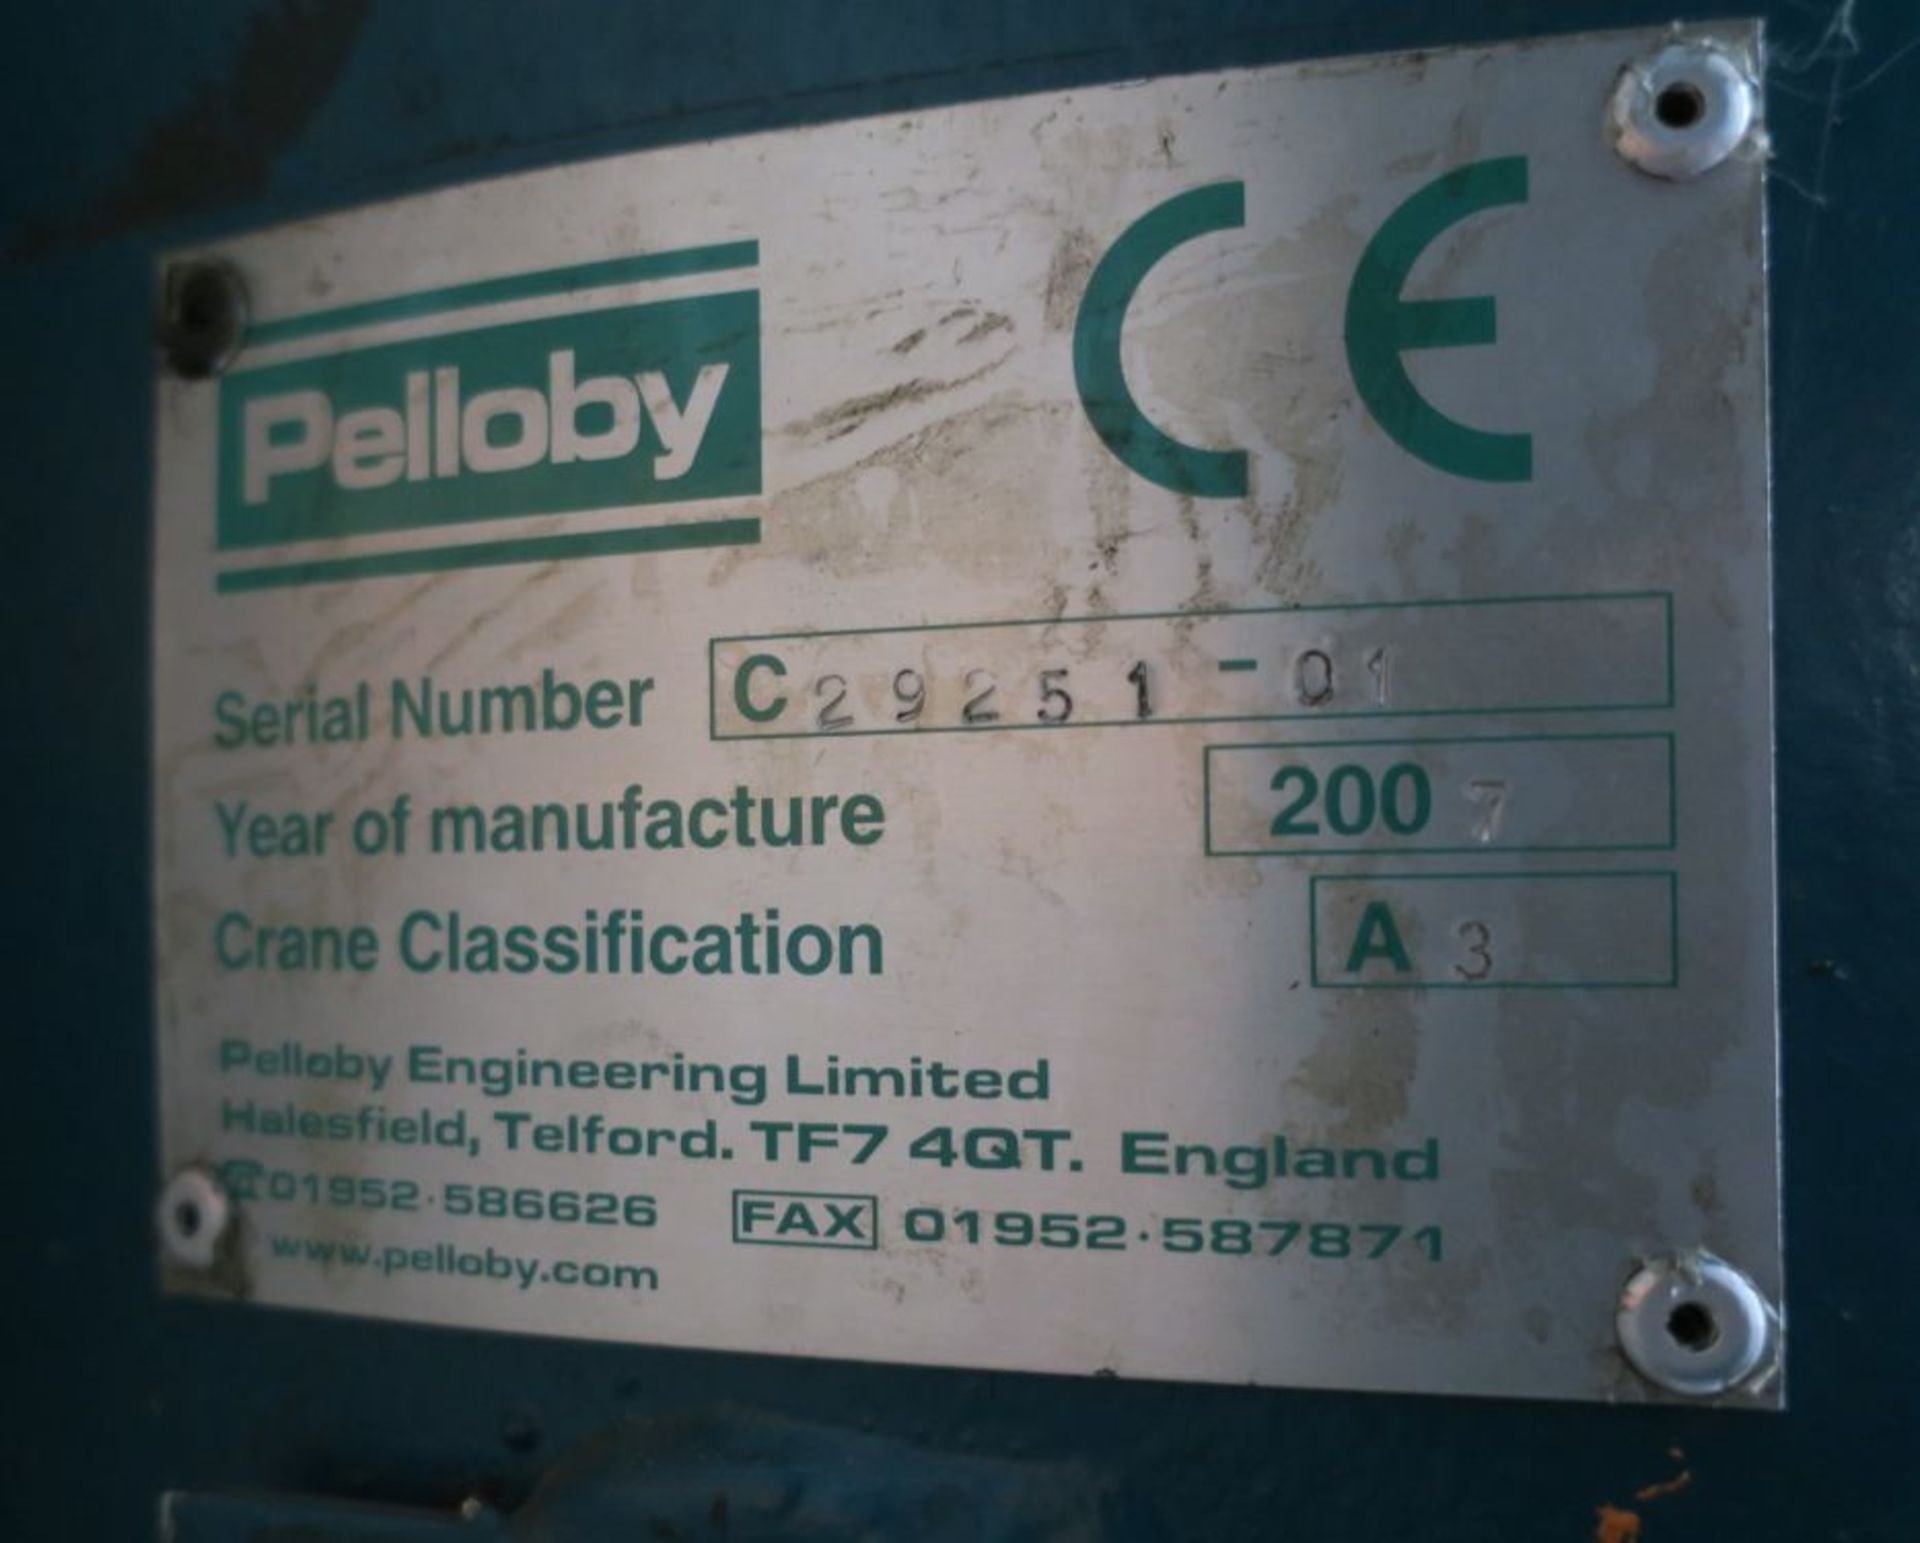 * Pelloby Free Standing Jib Crane, 2 Ton Electric Yale CPM Hoist. YOM 2007, S/N 29251-01, Class - Image 2 of 4